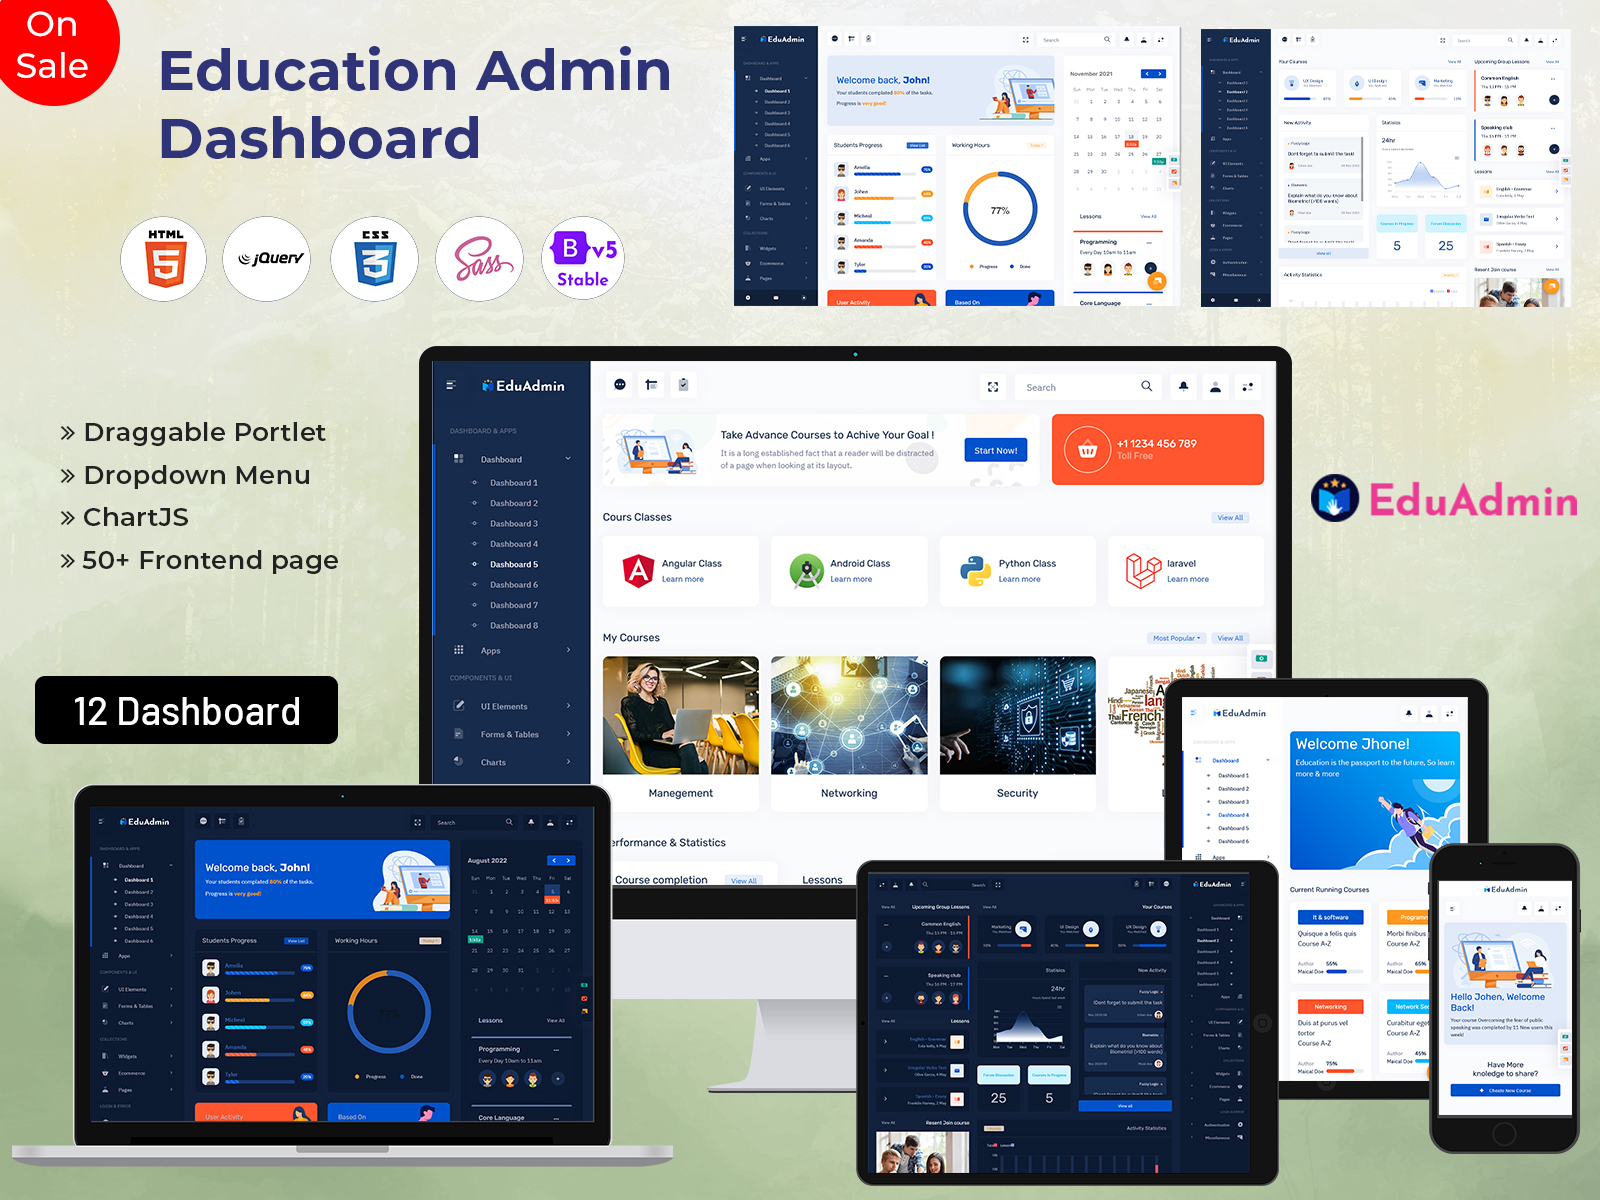 Education LMS Dashboard Admin Template